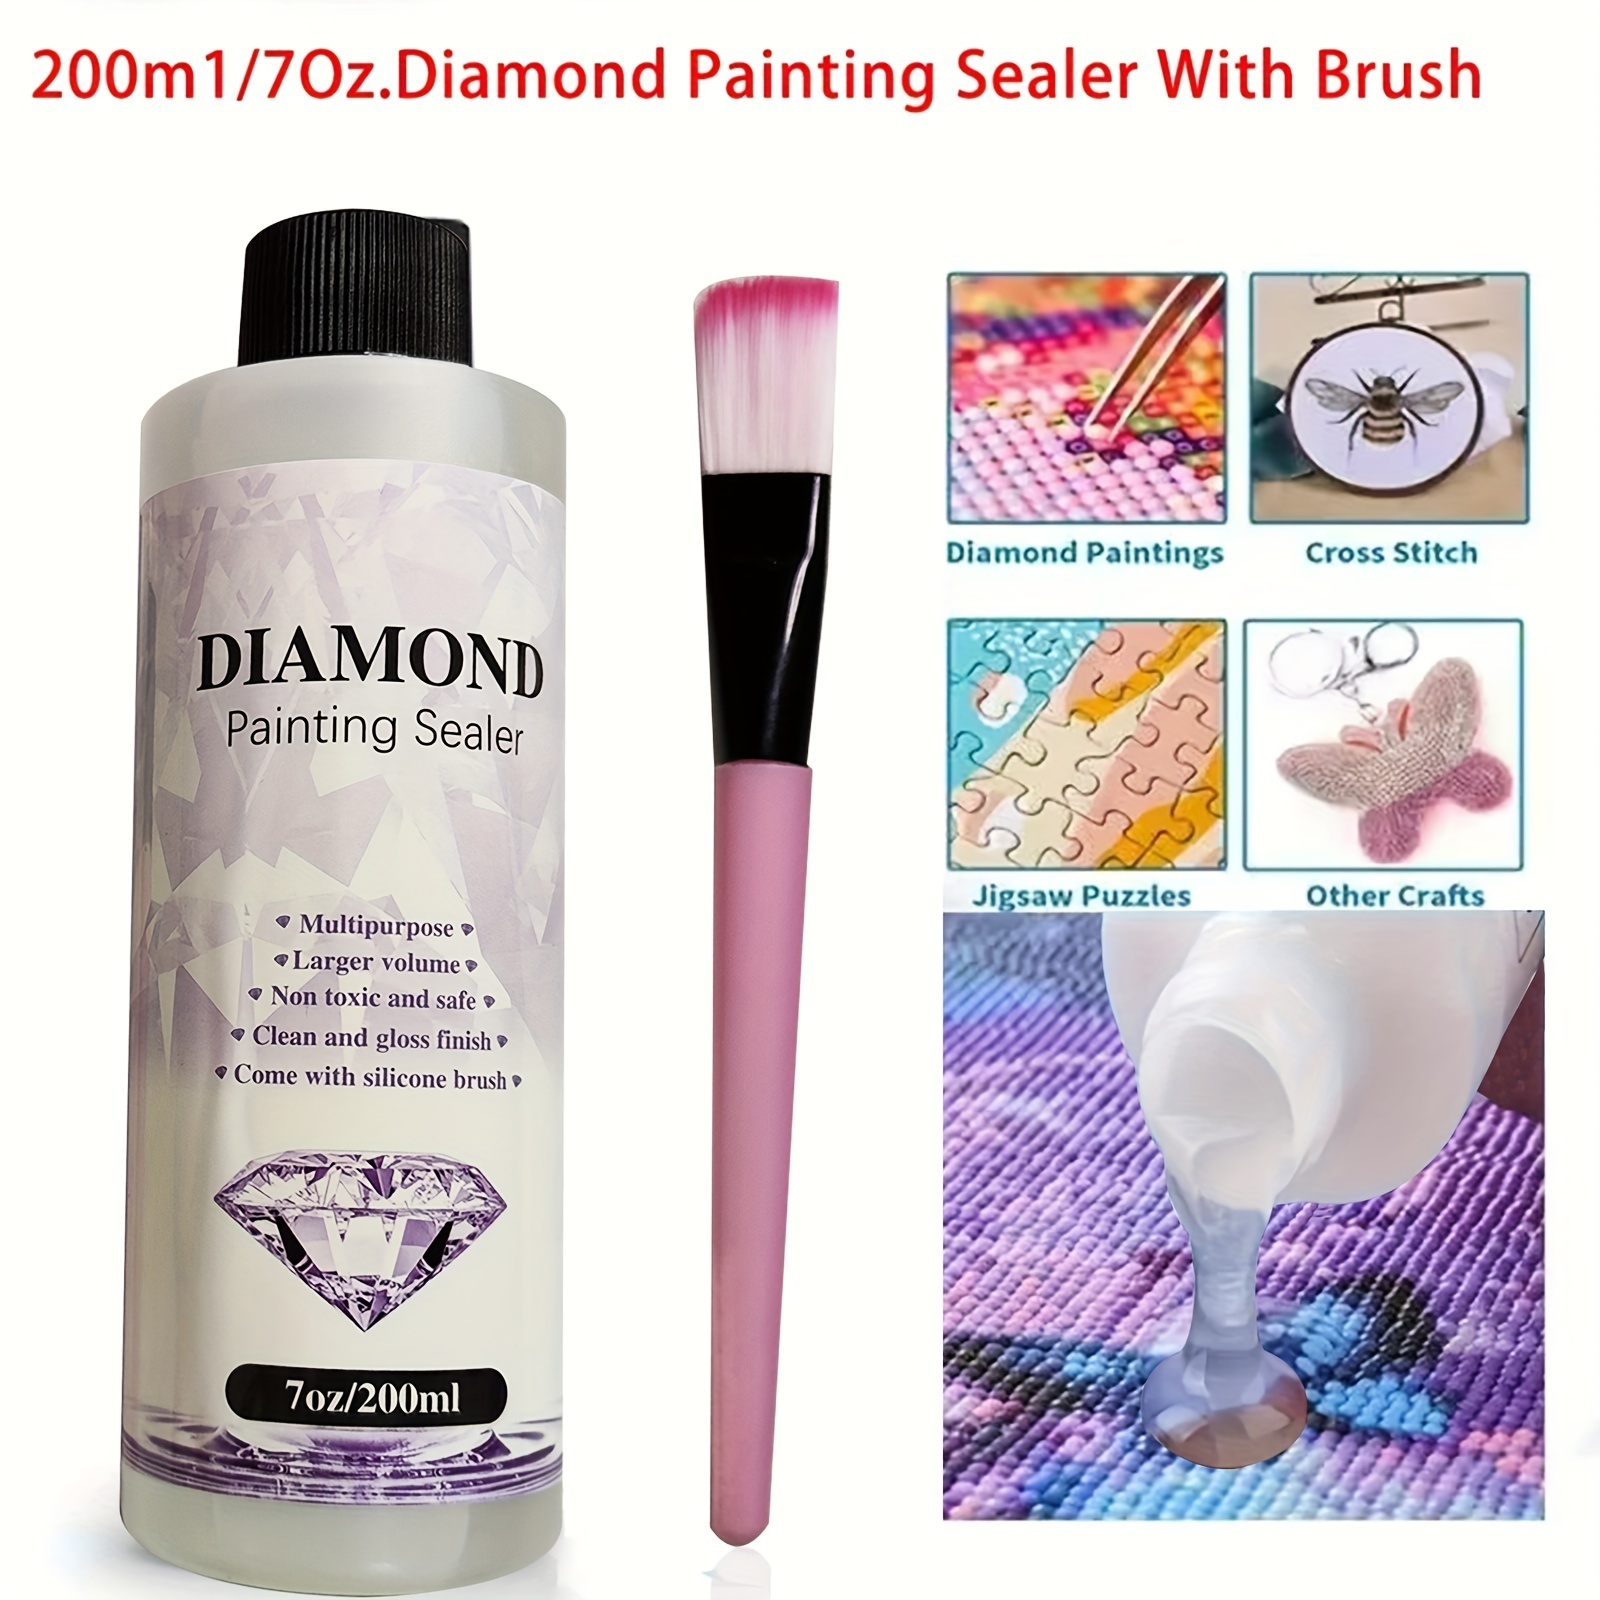 LANBEIDE 200ML Diamond Painting Sealer 5D Art Glue Permanent Hold Shine  Effect Ages 10+, Clear 